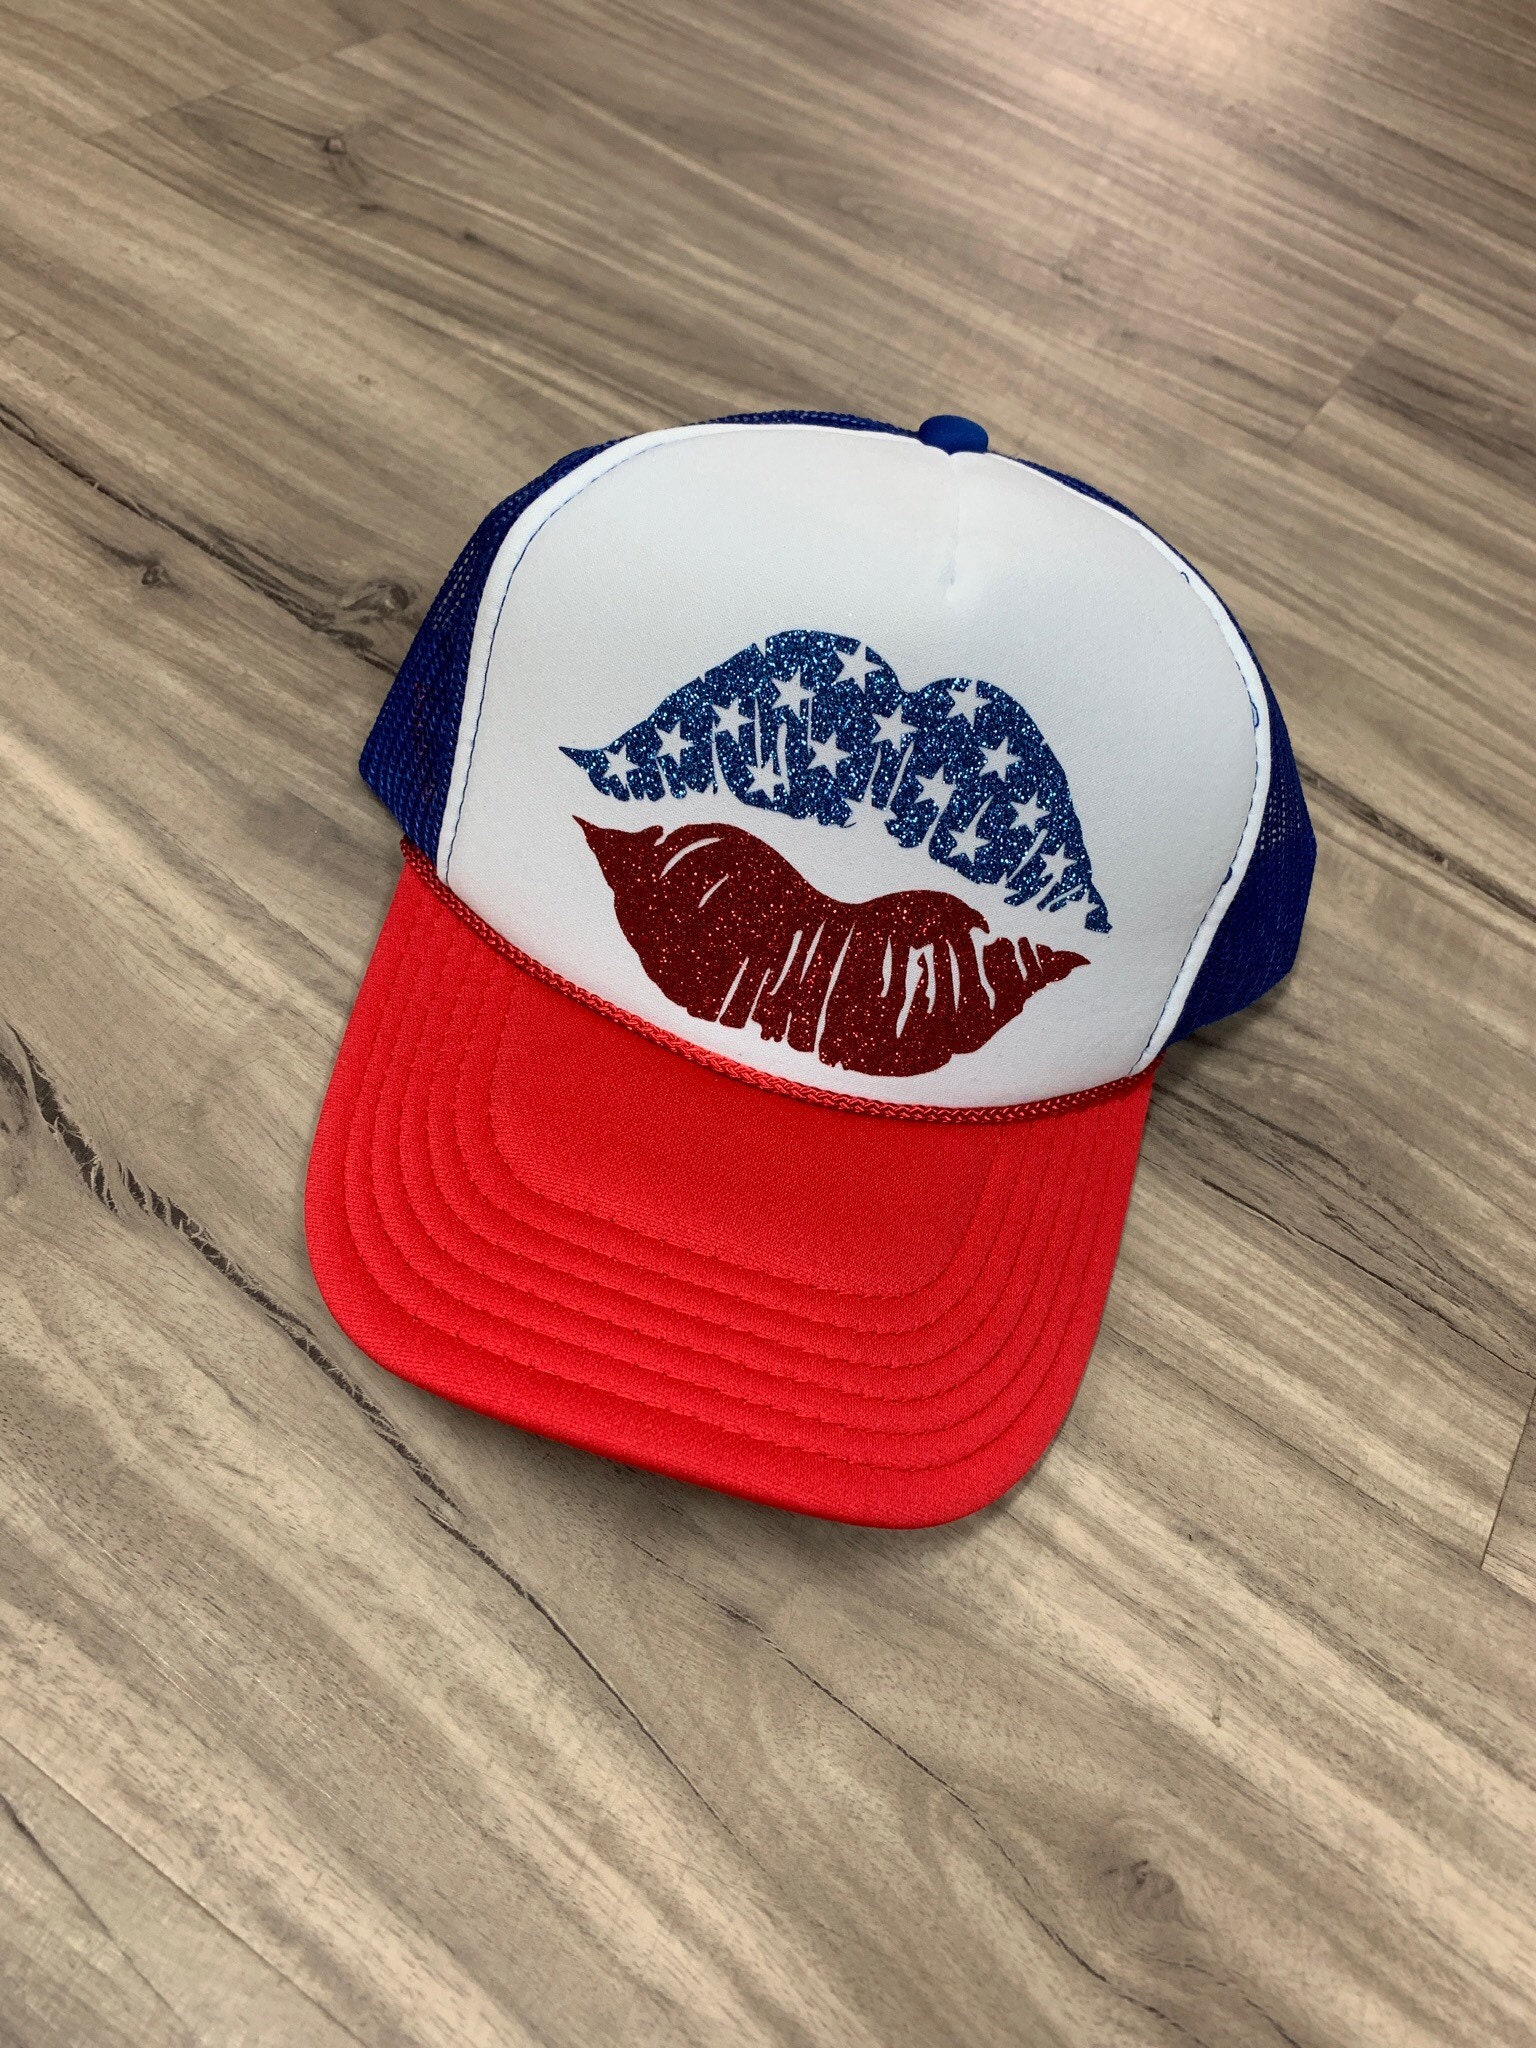 Lips Baseball Etsy Hat 